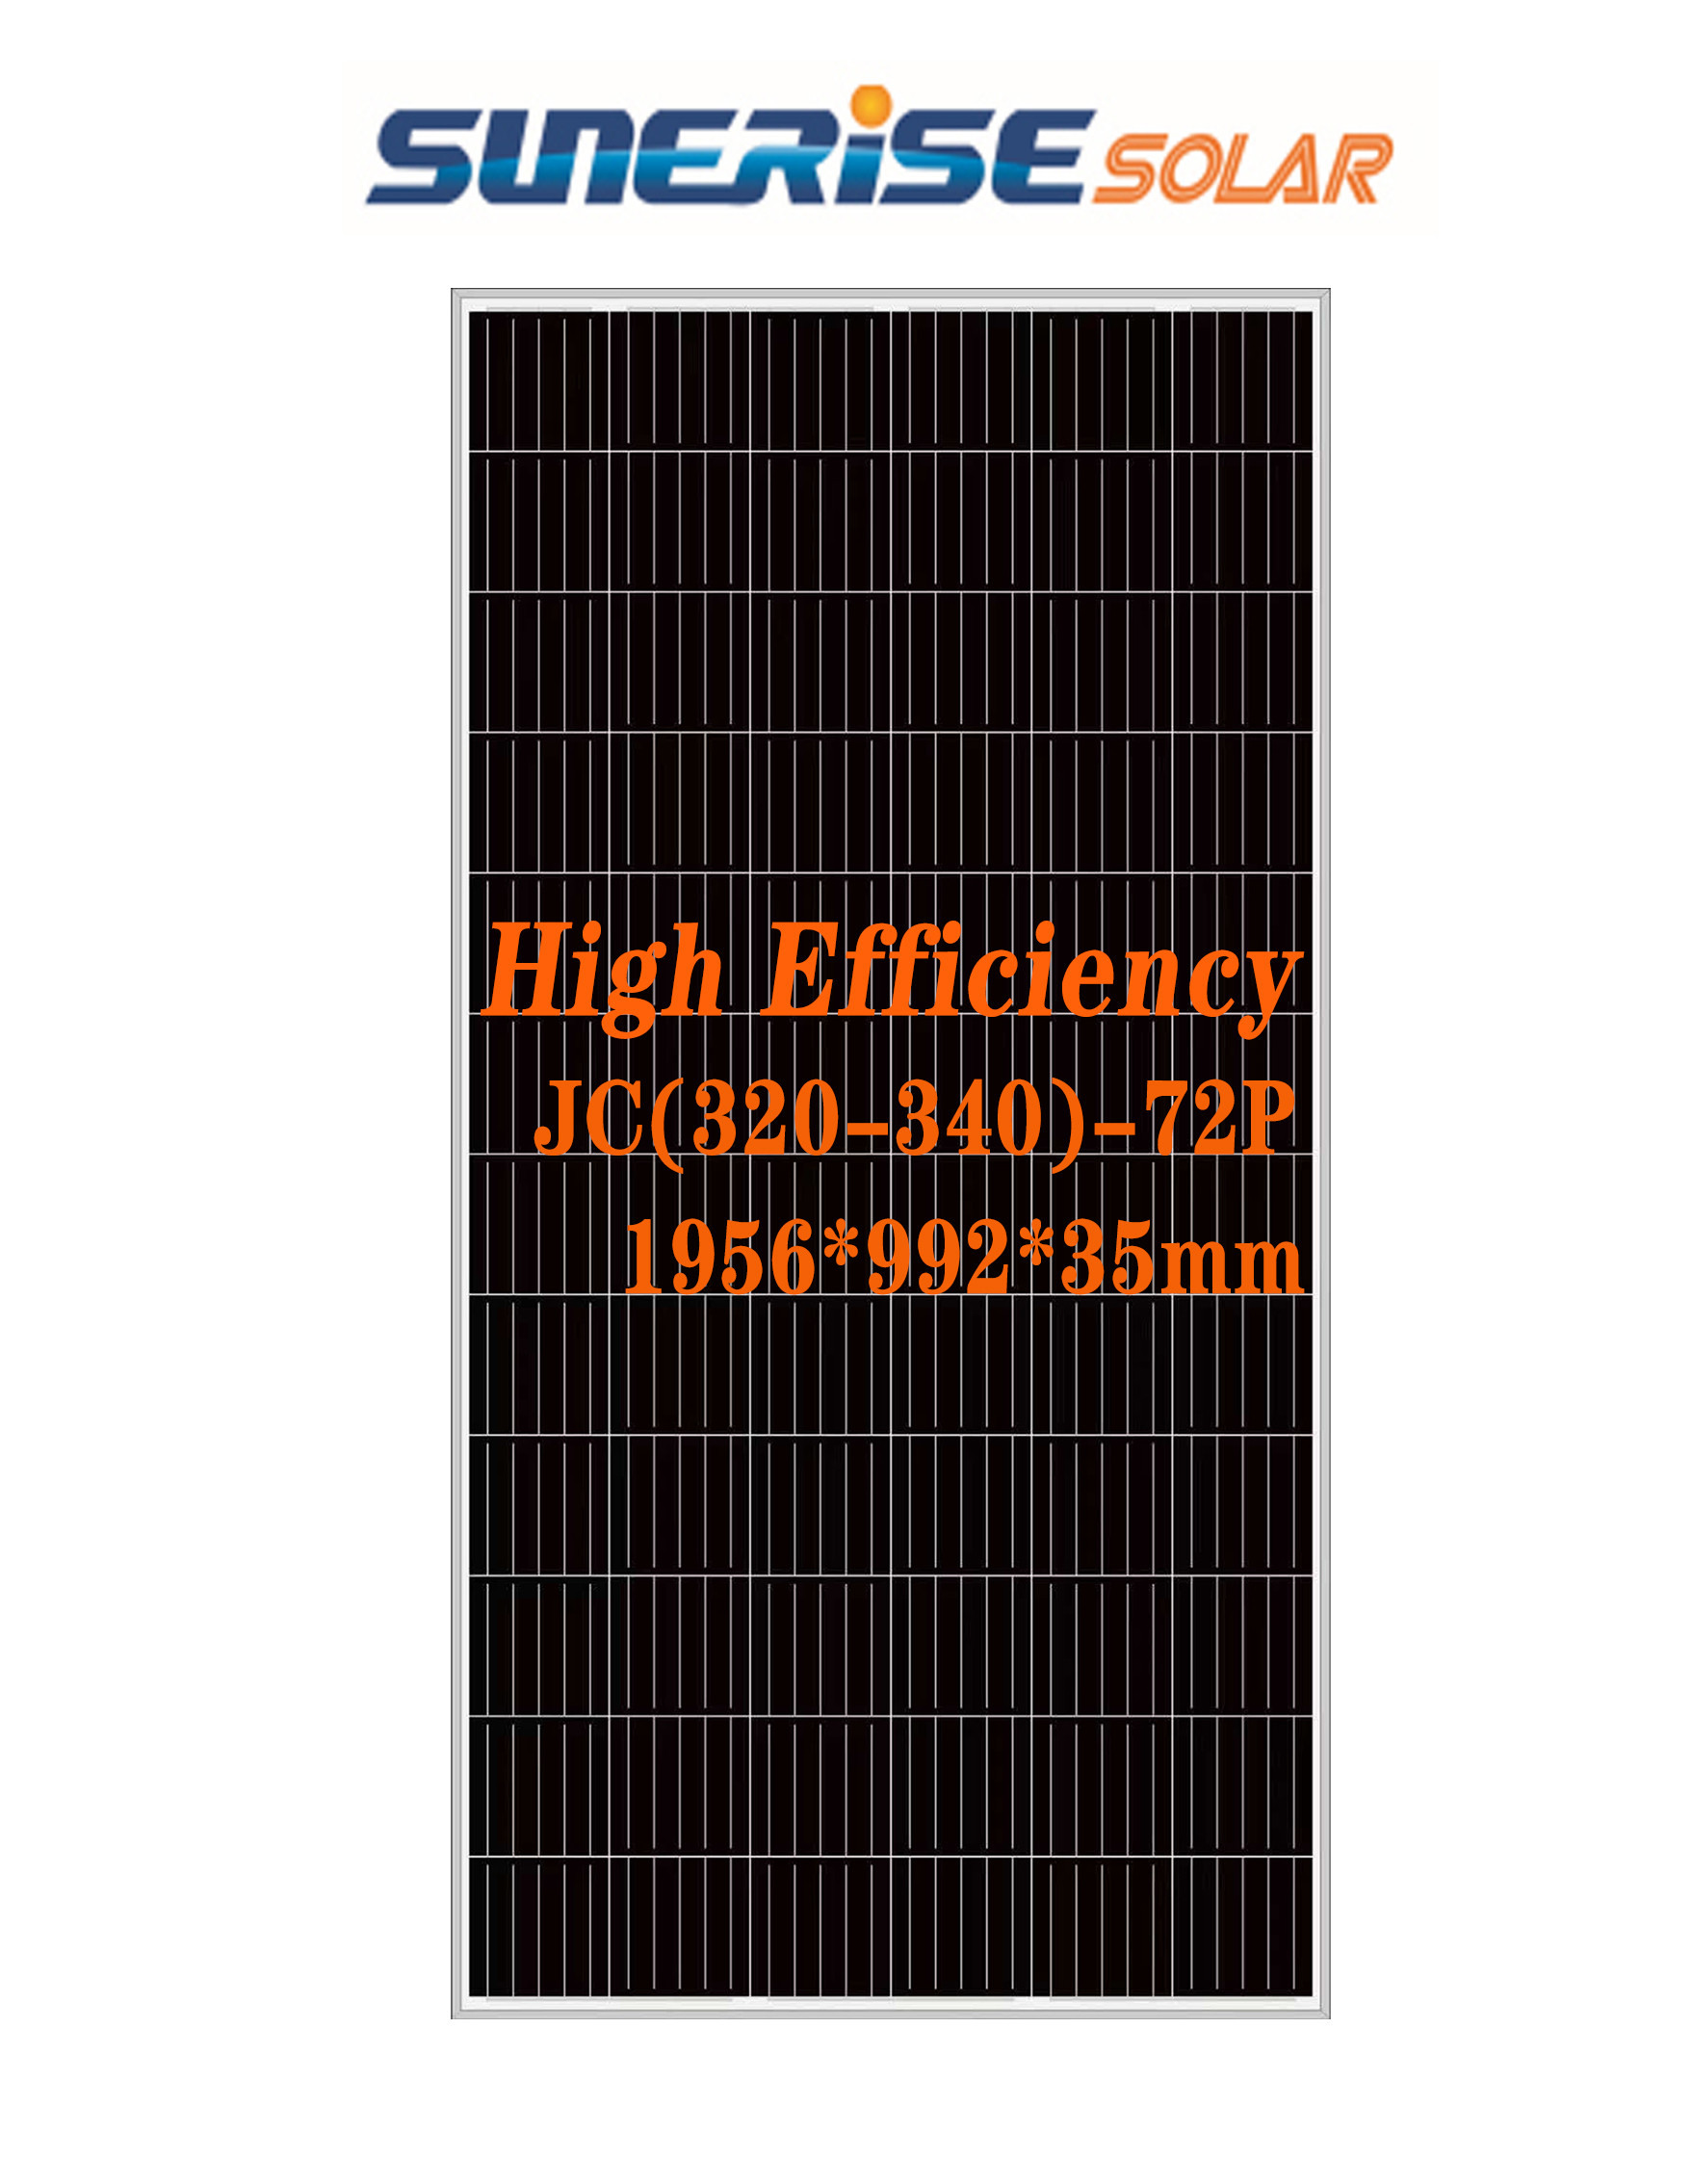 330W Polycrystalline Solar Panel